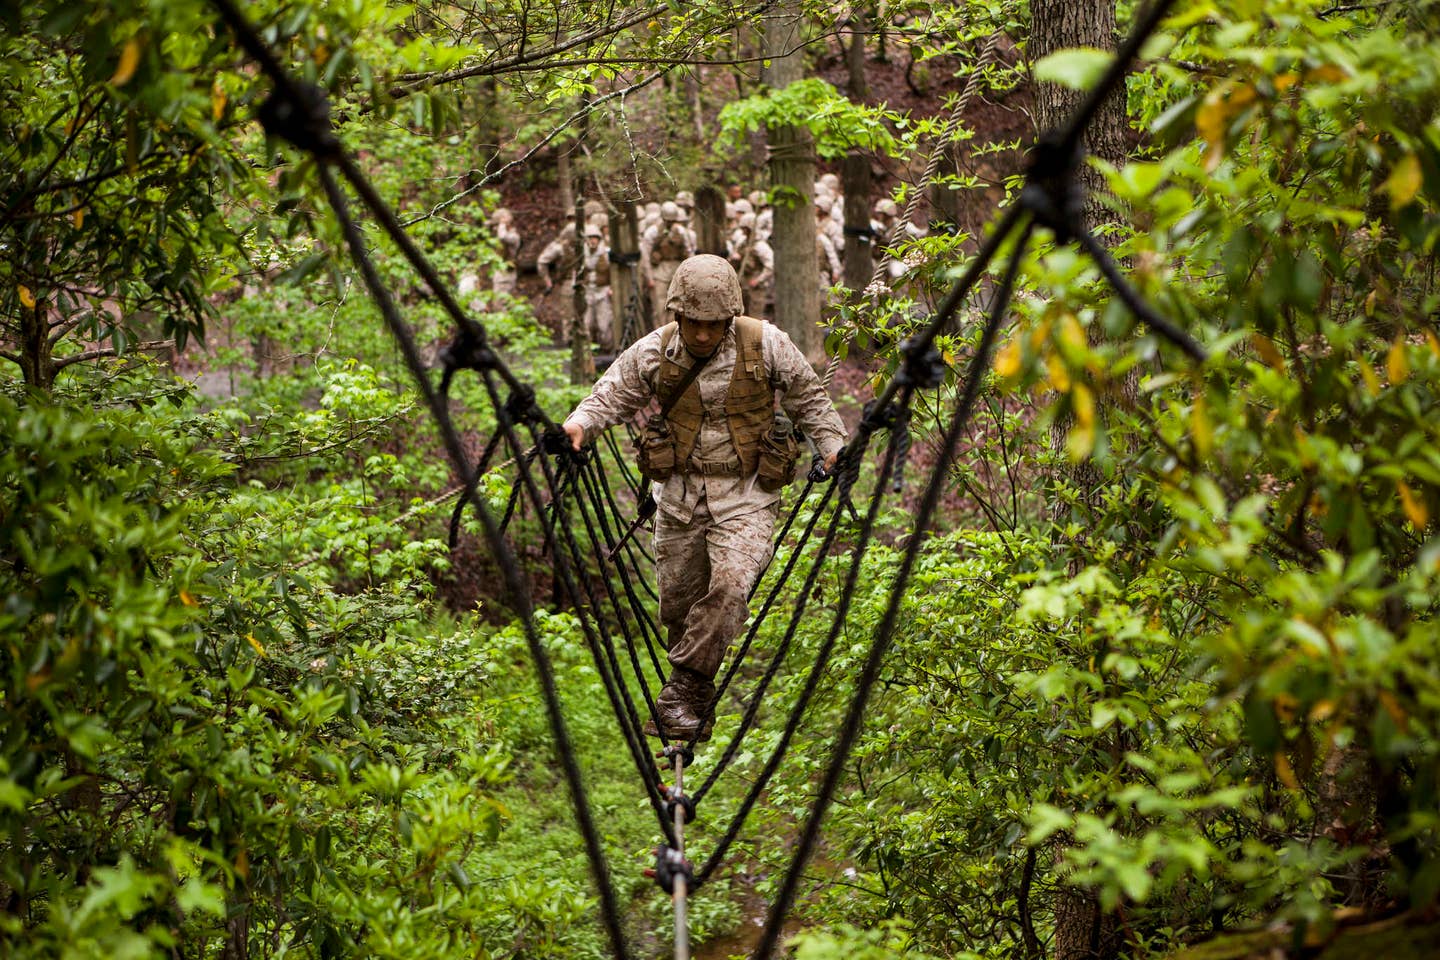 U.S. Marine Corps Combat Camera photo by Cpl. Laura Mercado